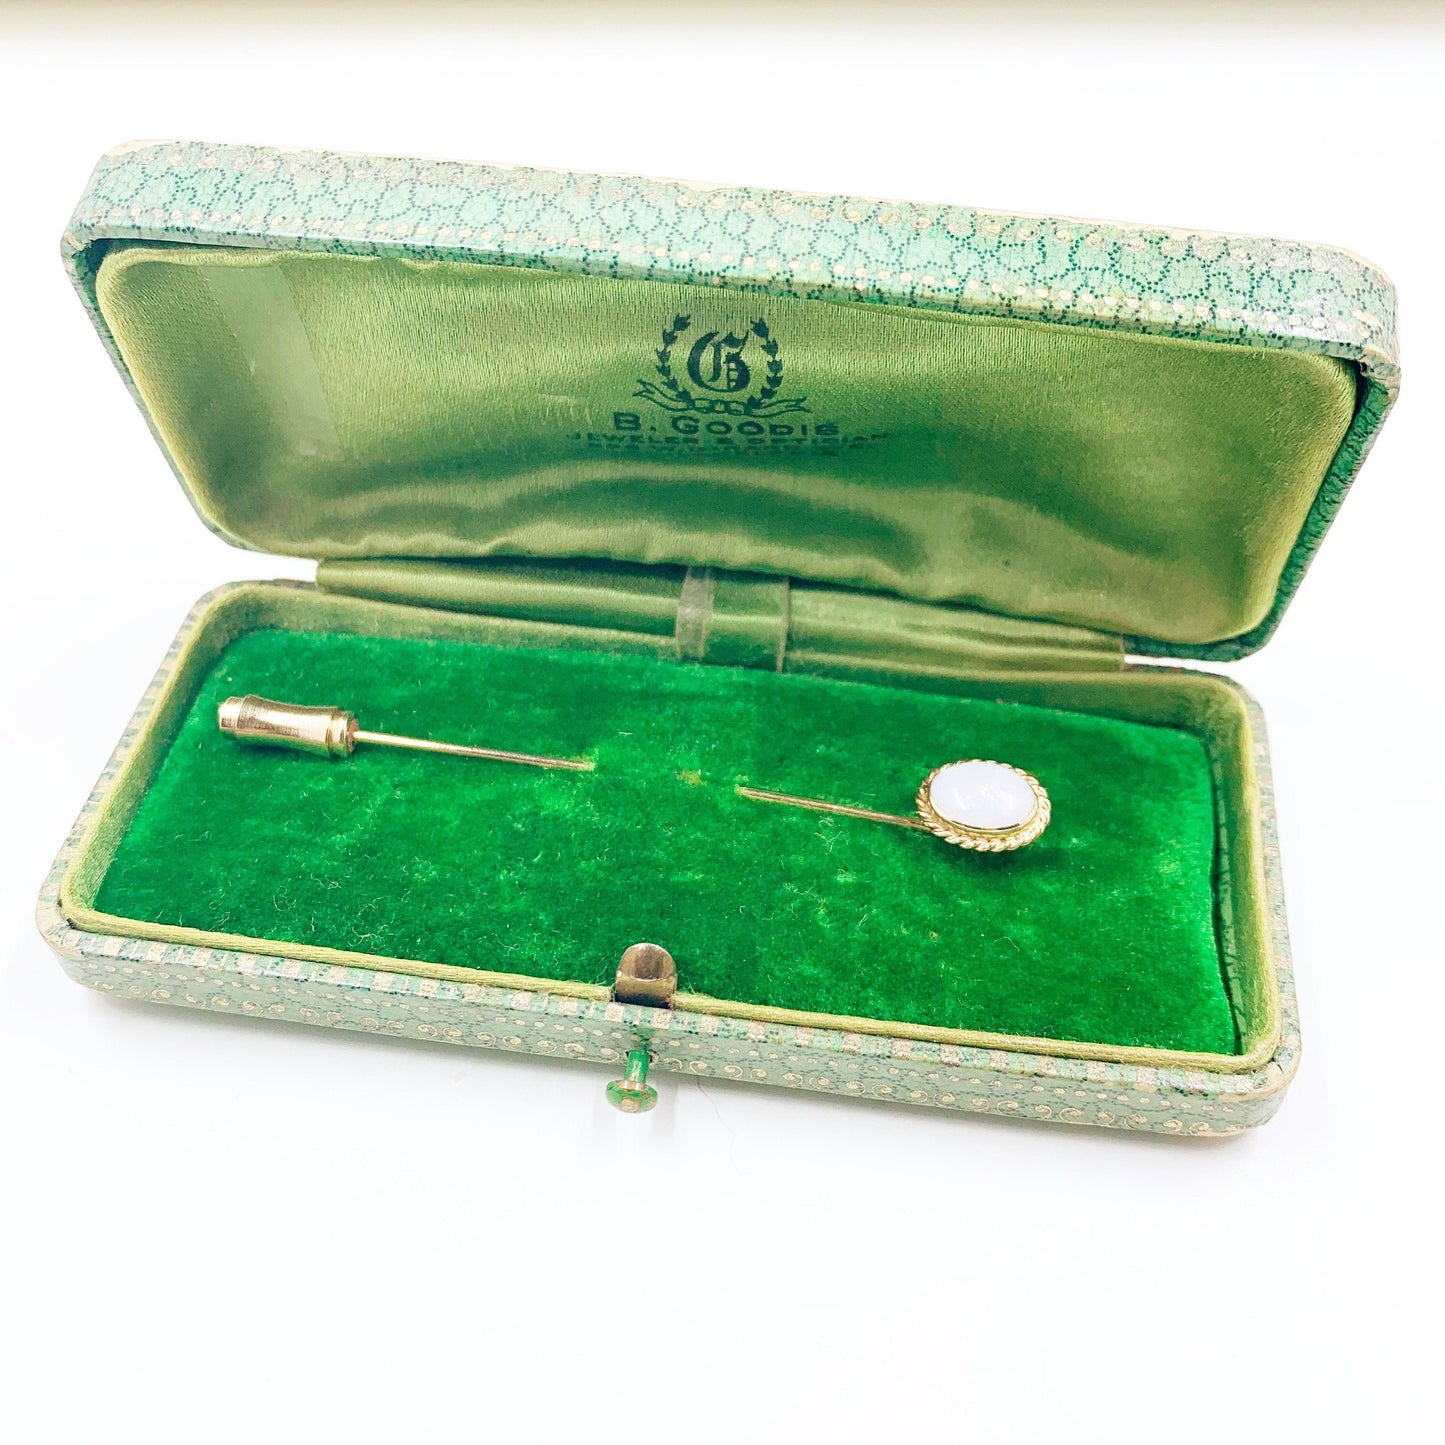 Vintage Gold Filled Opal Stick Pin | October Birthstone